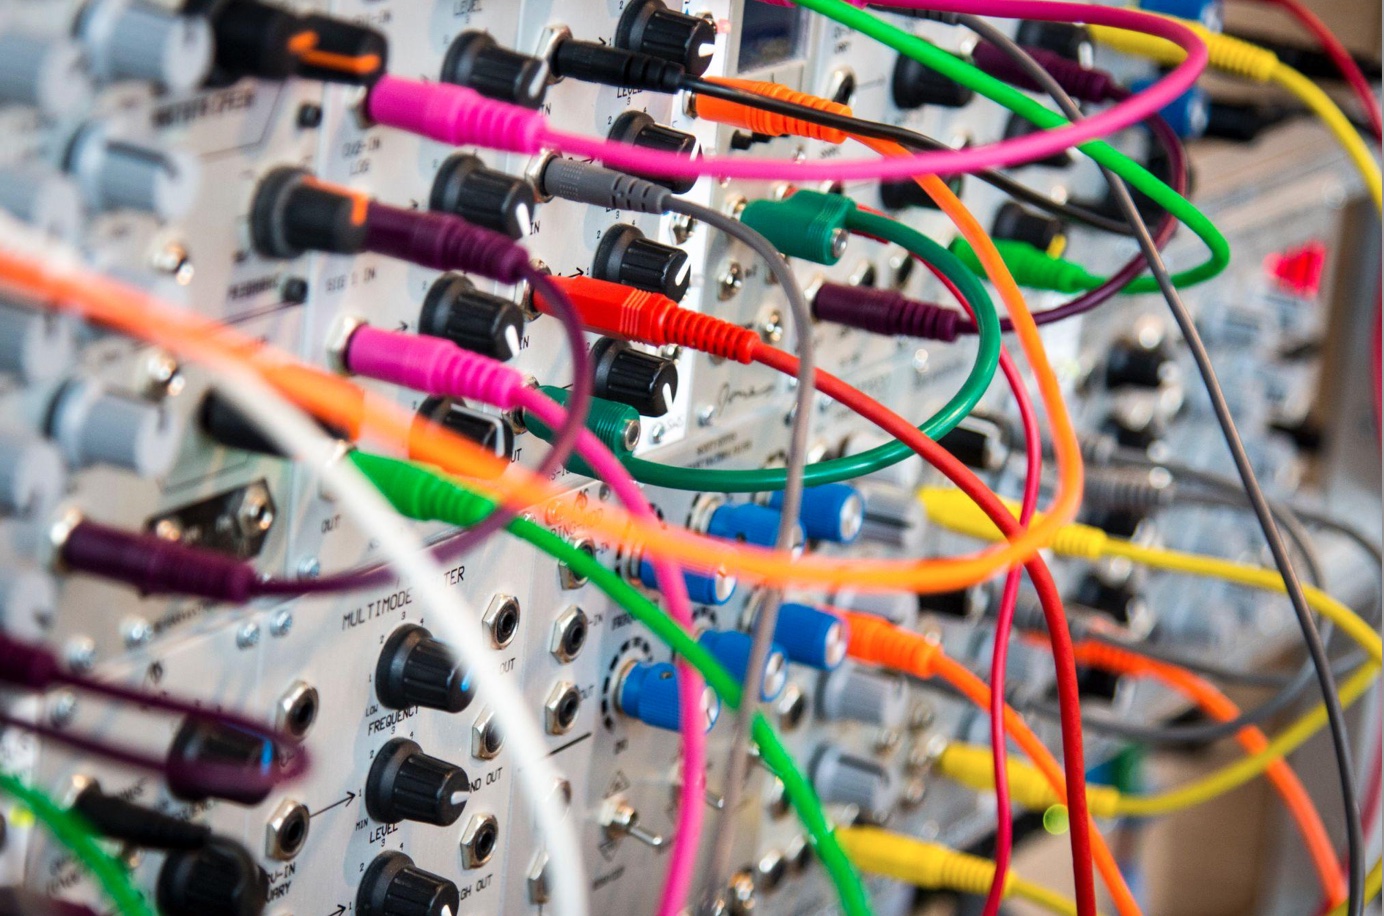 Assorted electrical cables; image by John Barkiple, via Unsplash.com.